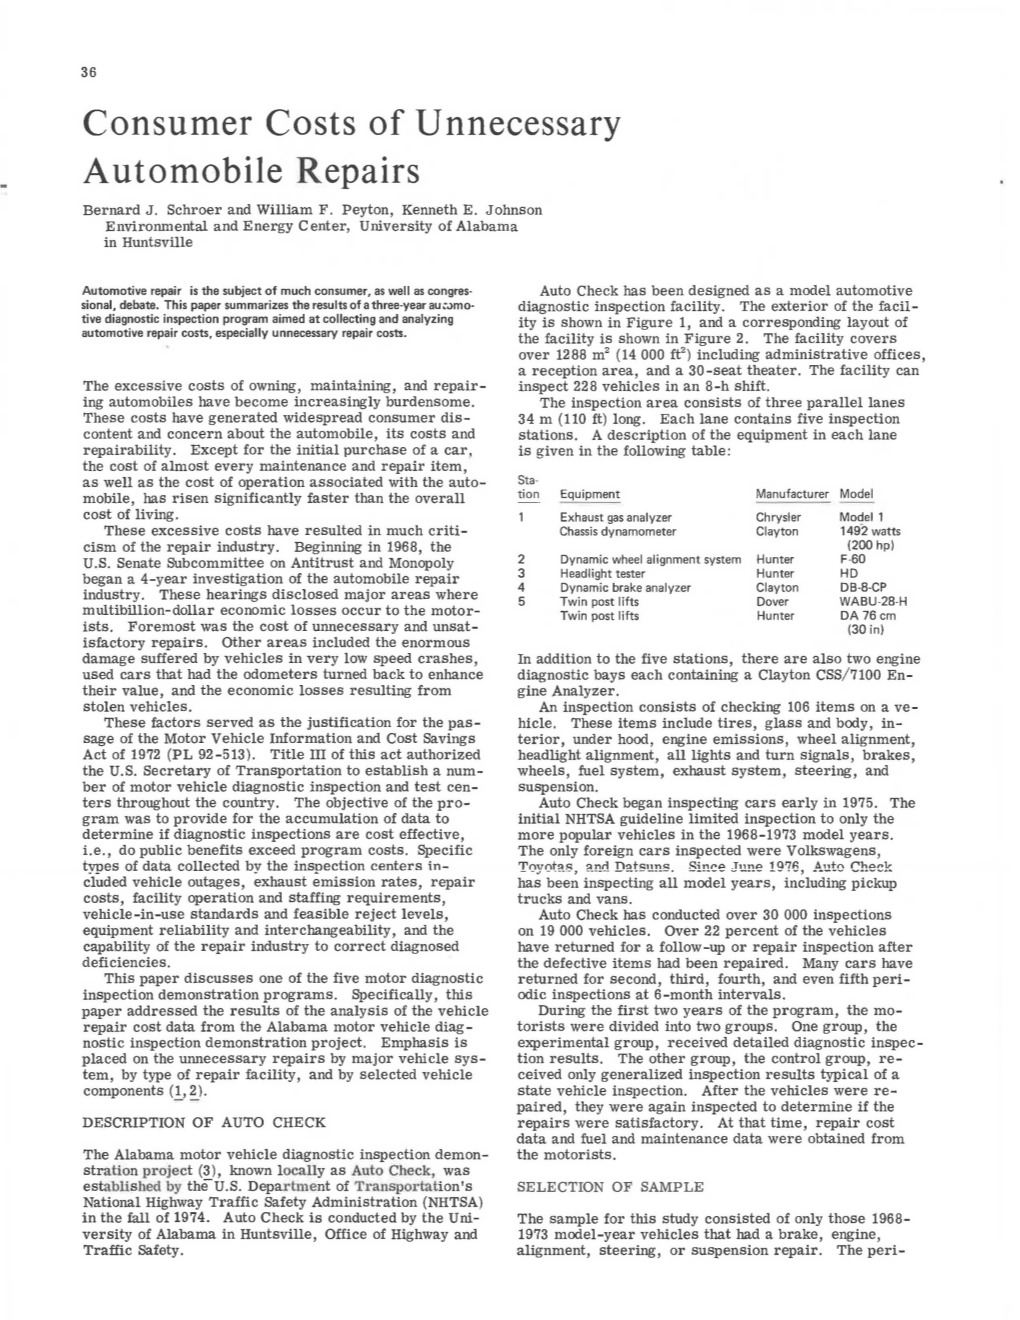 Consumer Costs of Unnecessary Automobile Repairs Bernard J